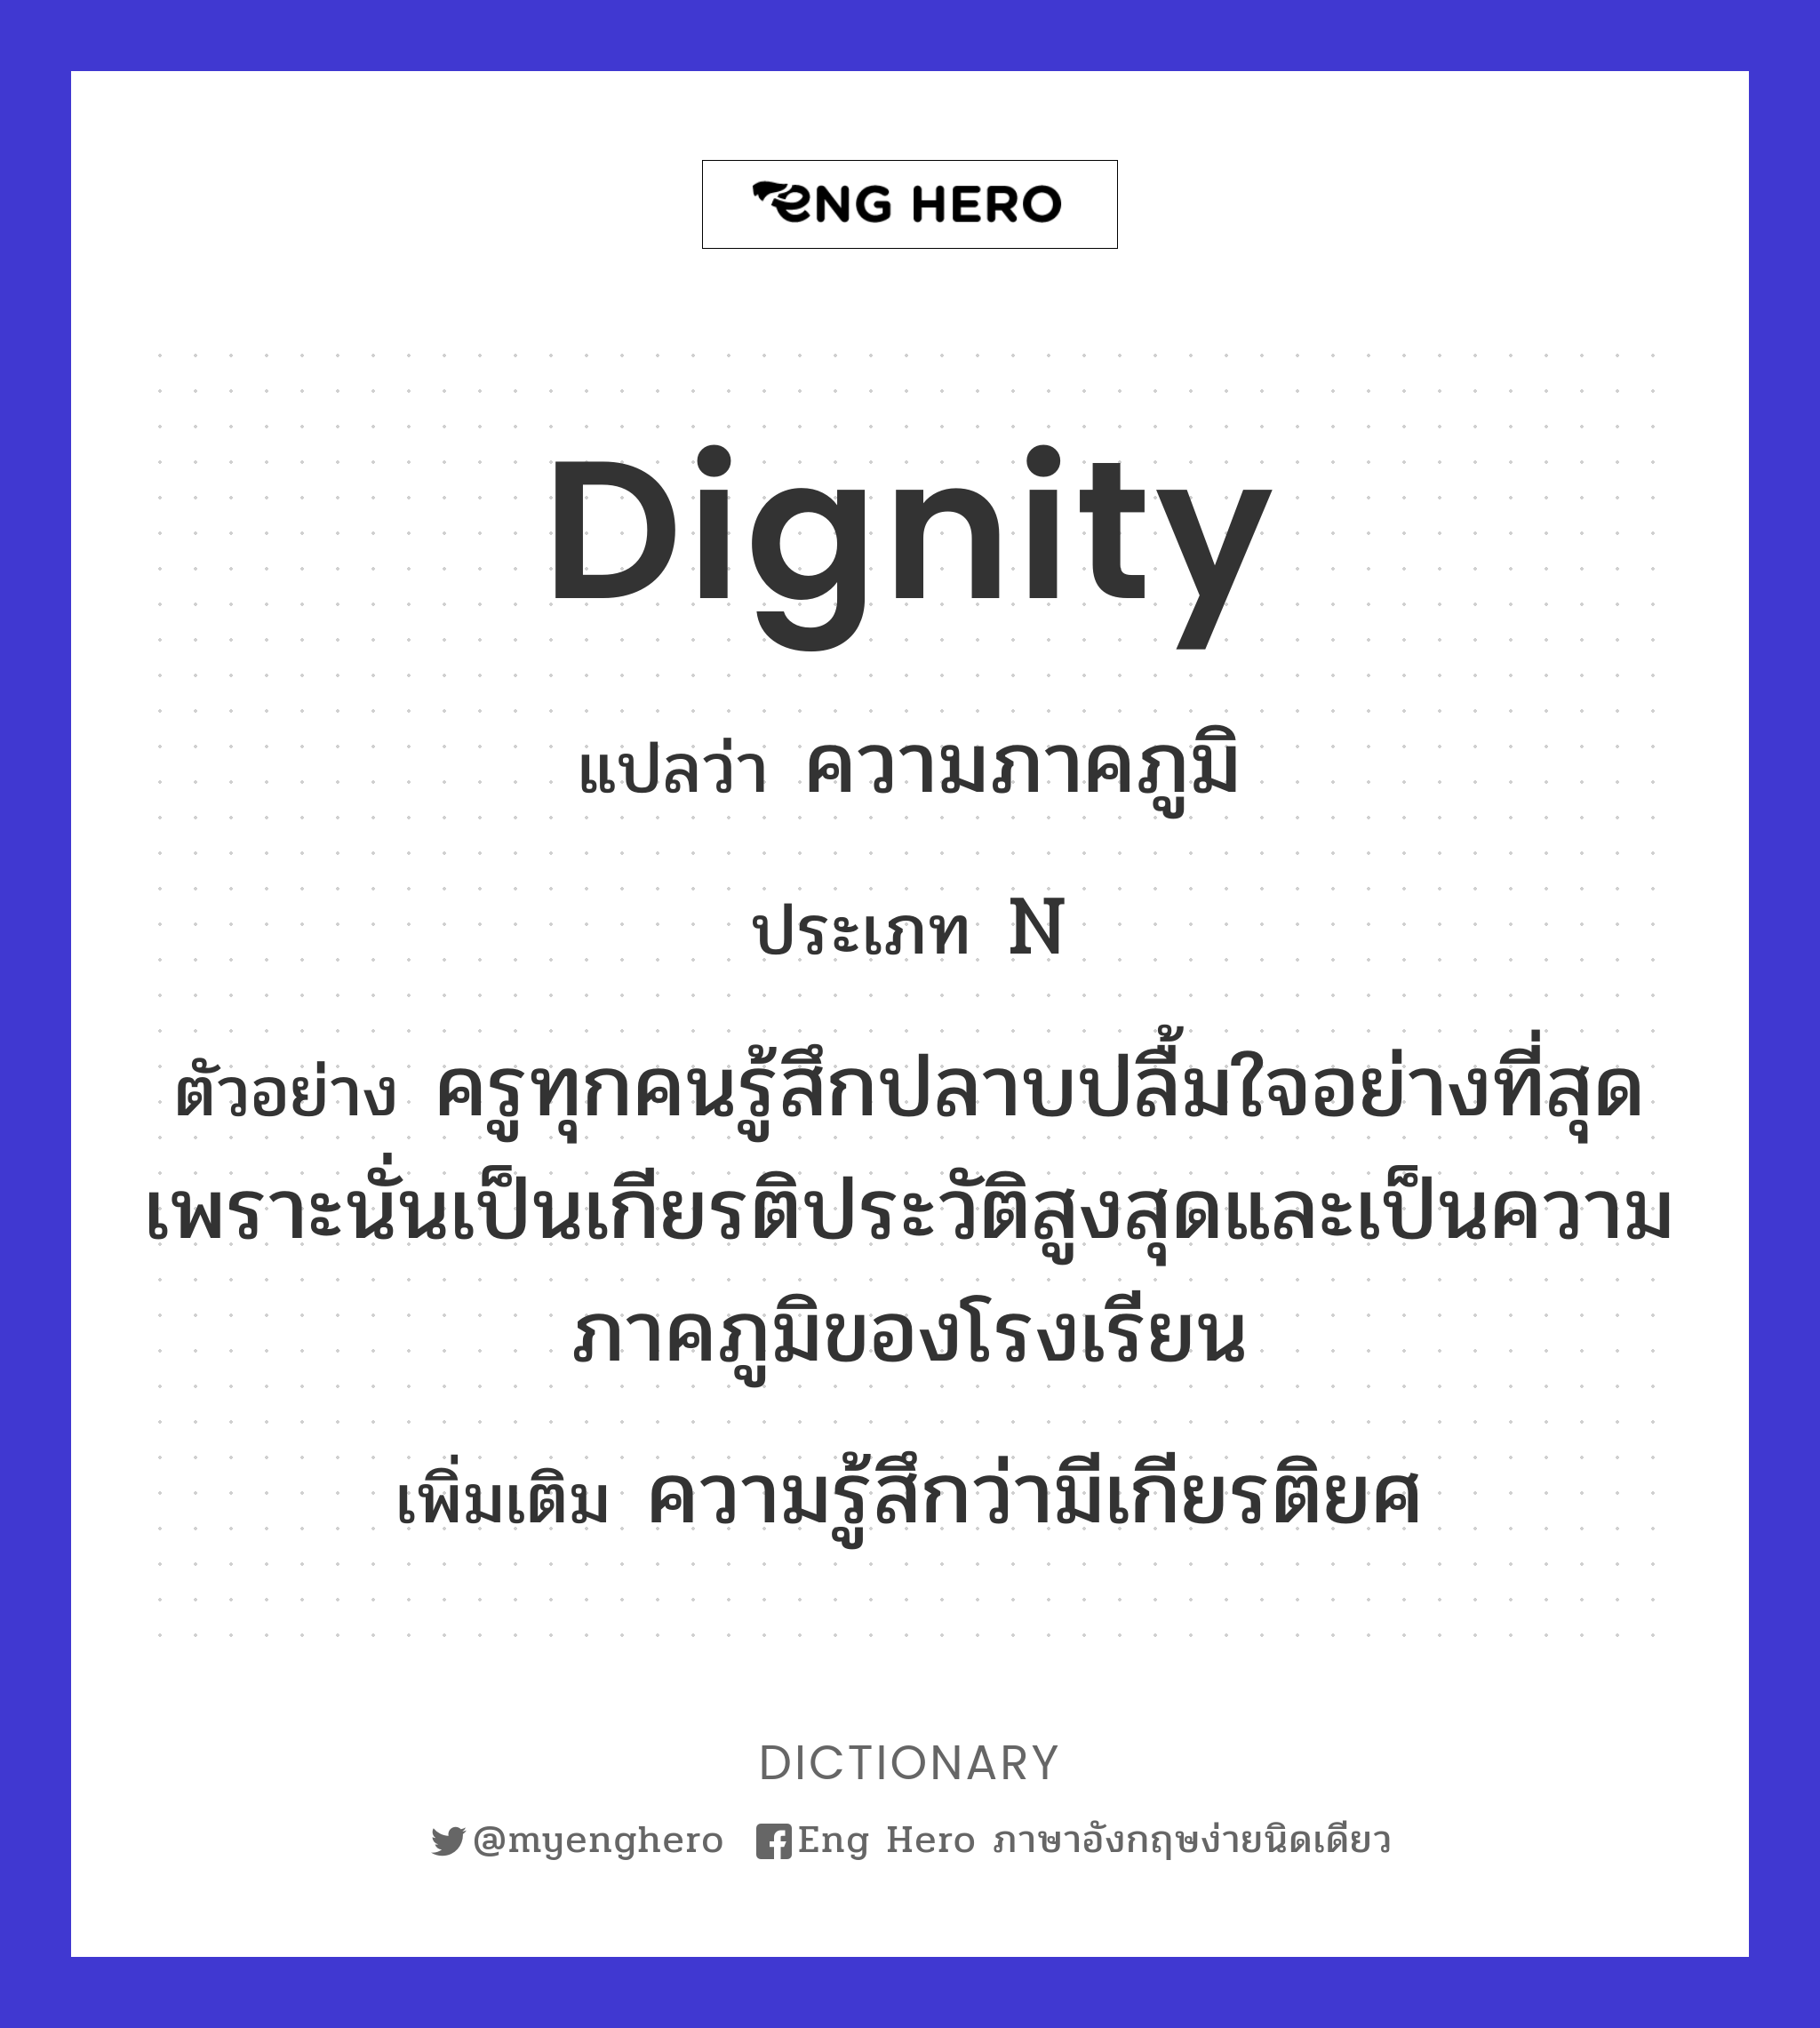 dignity